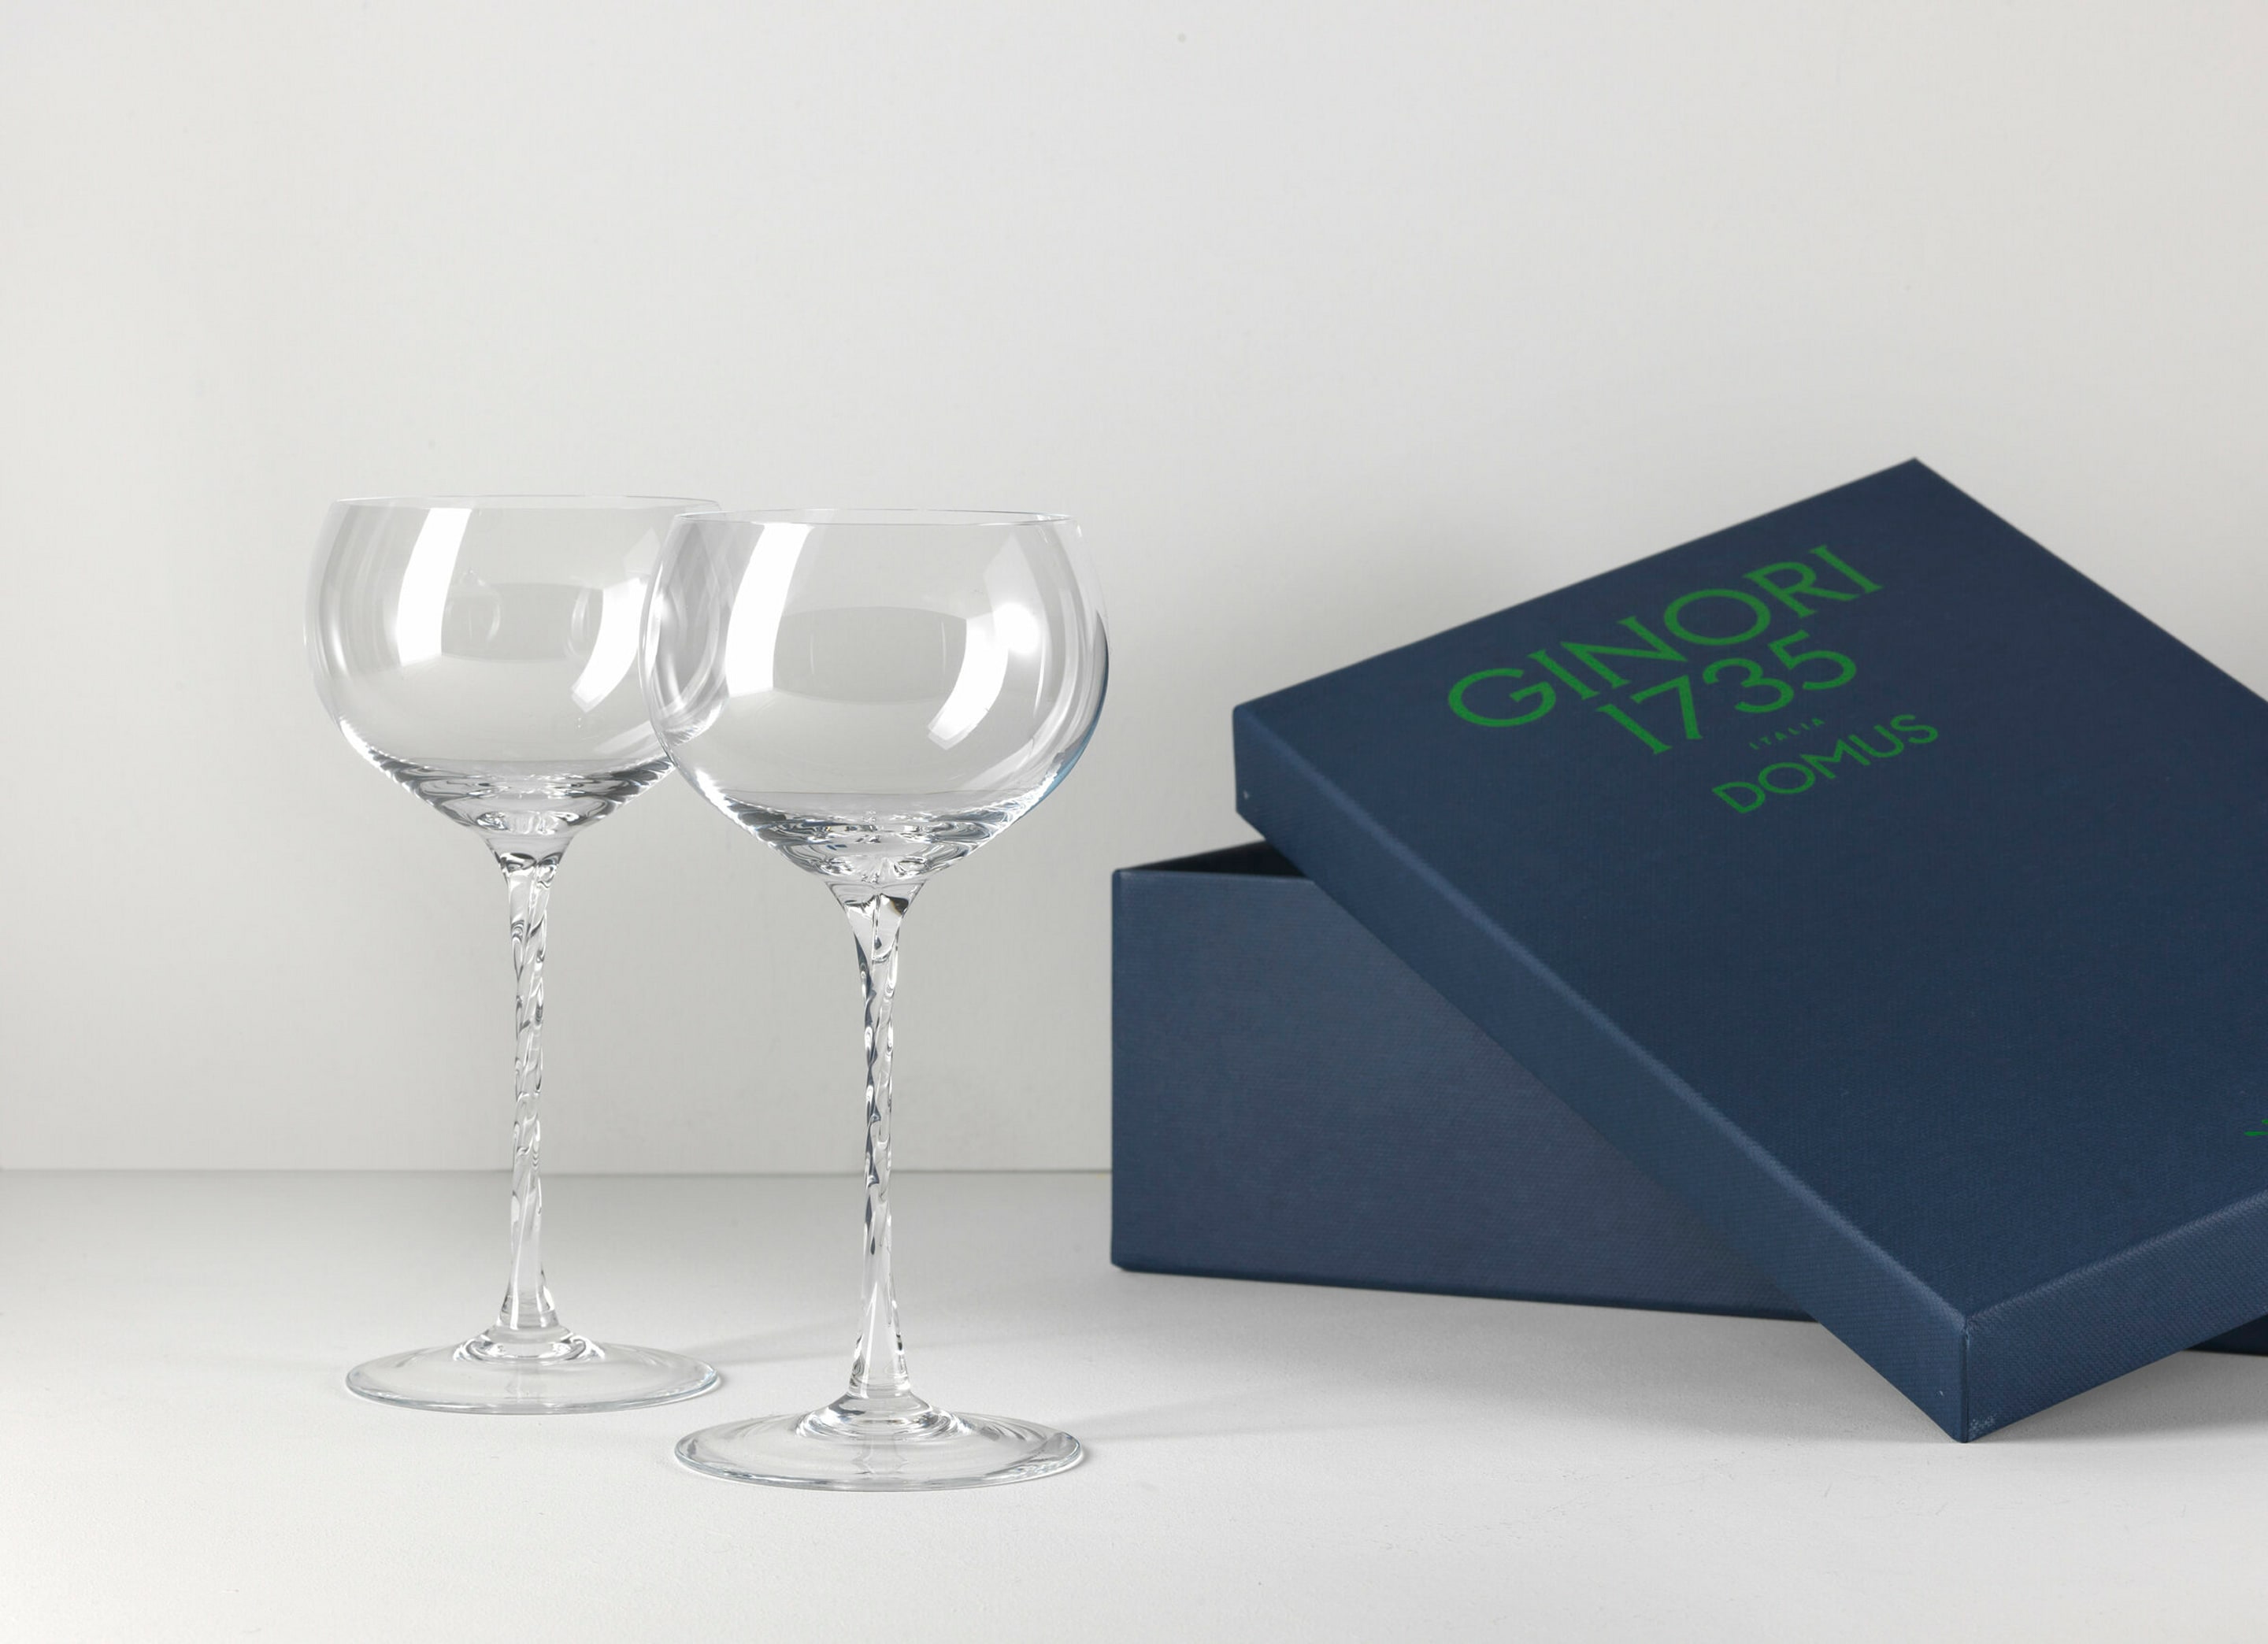 Richard Ginori Small Wine Glass - Ajka Crystal